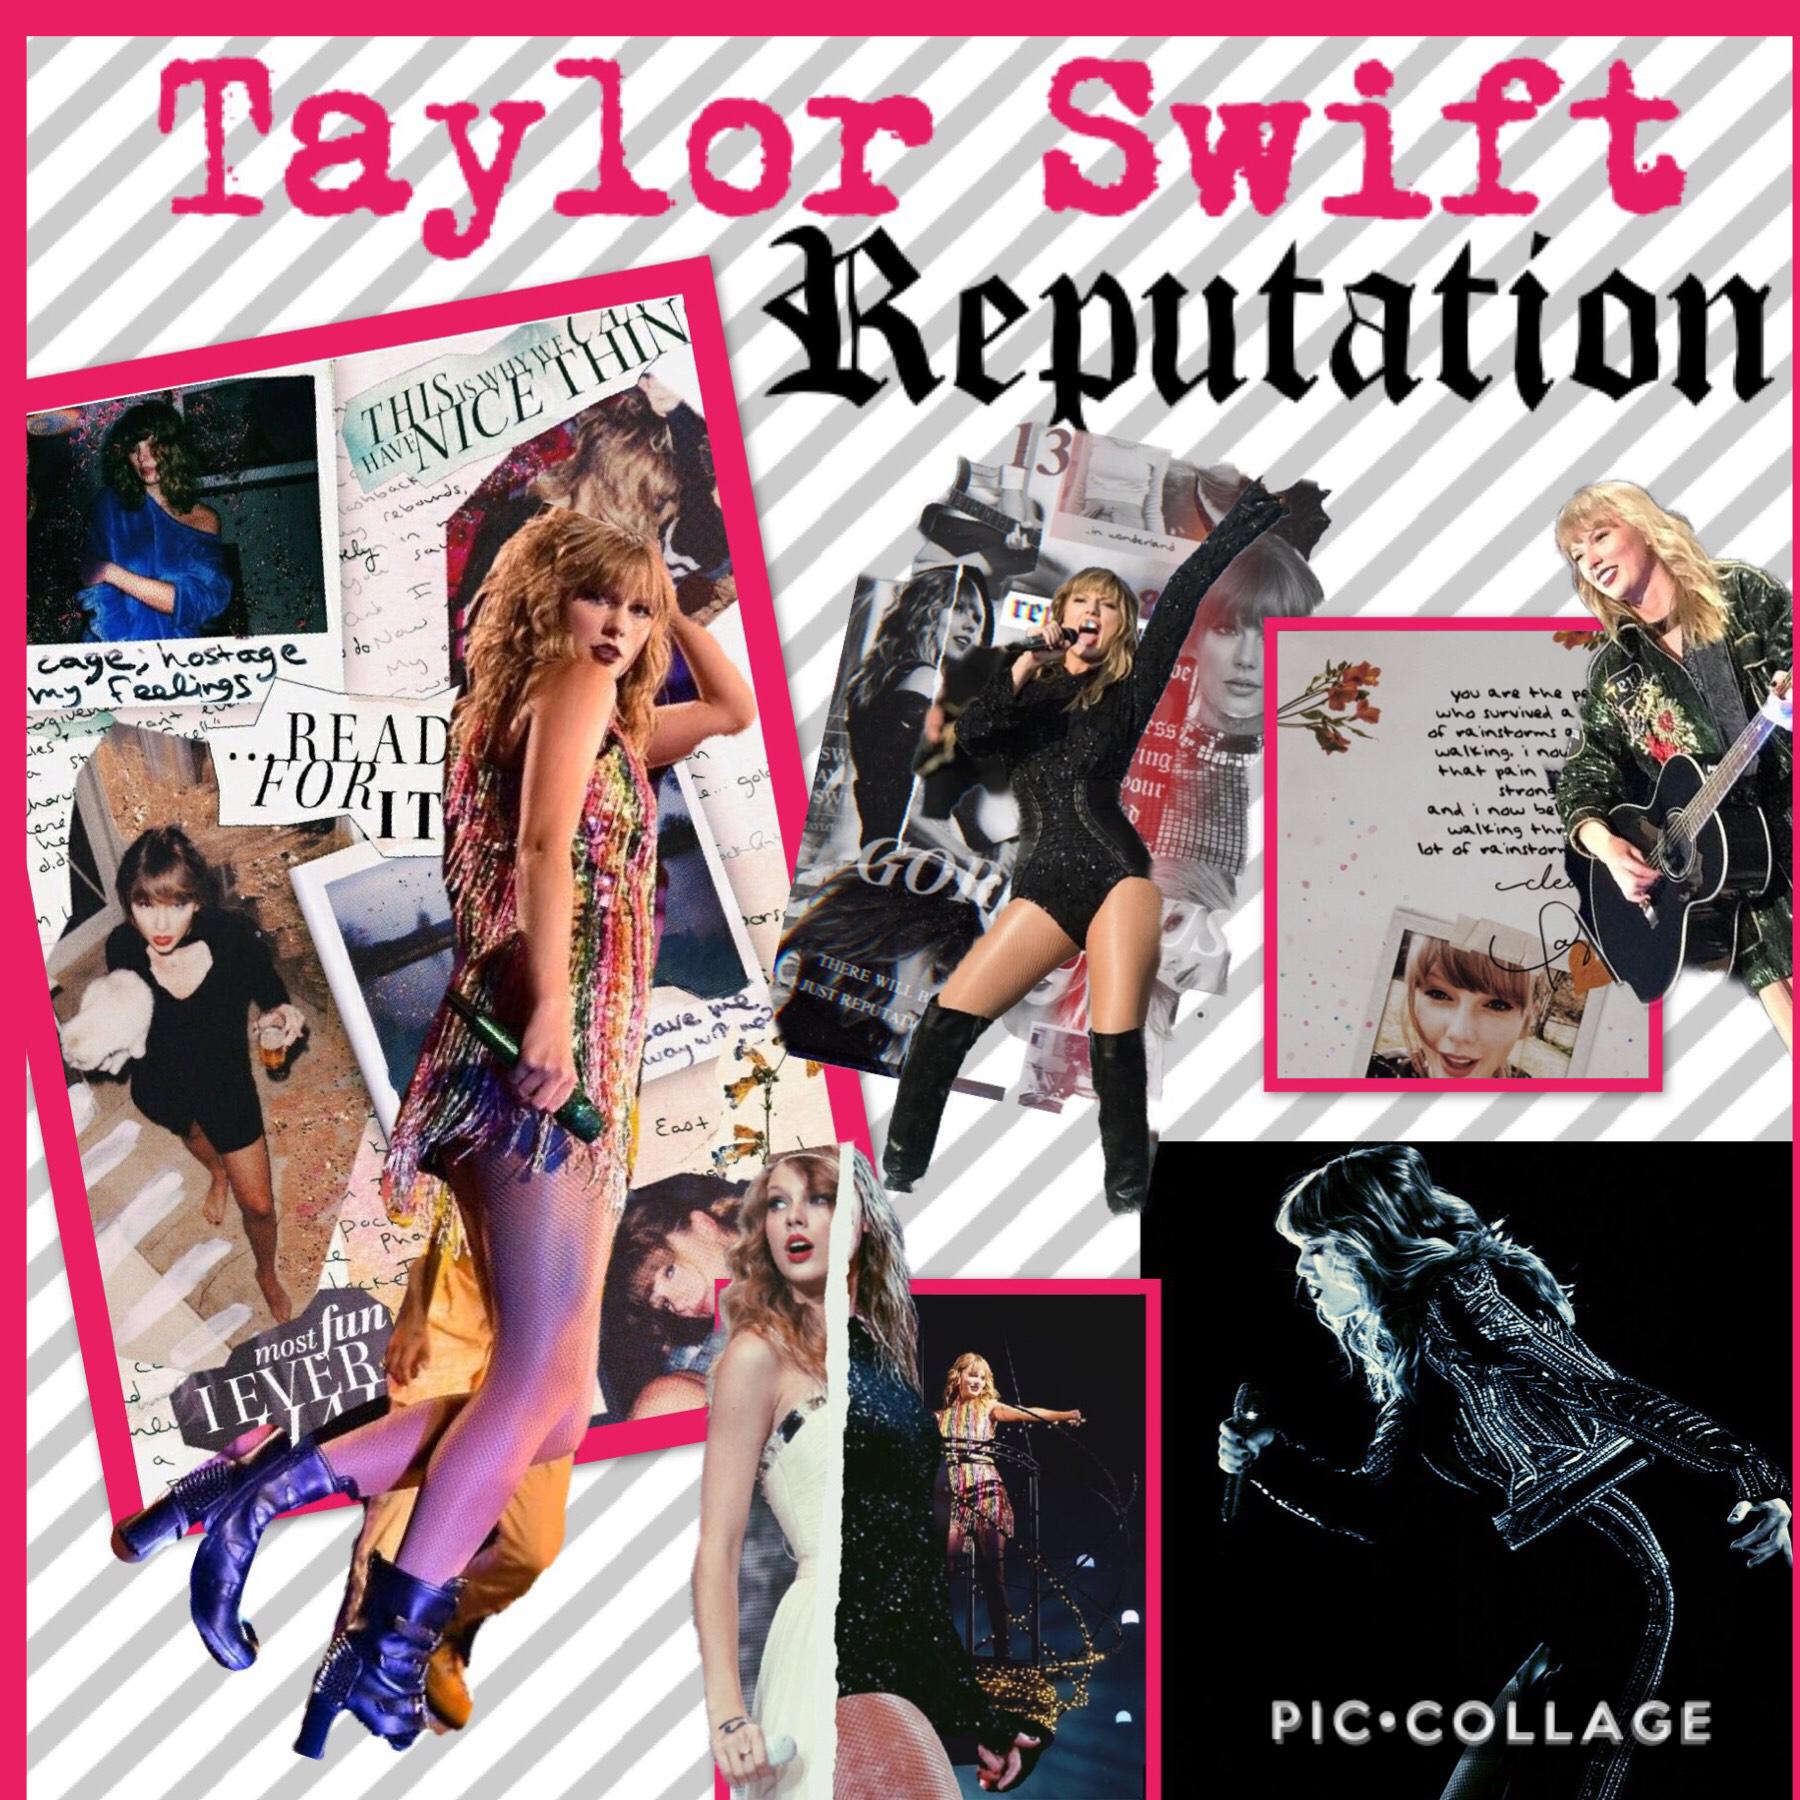 Taylor Swift inspired #reputation